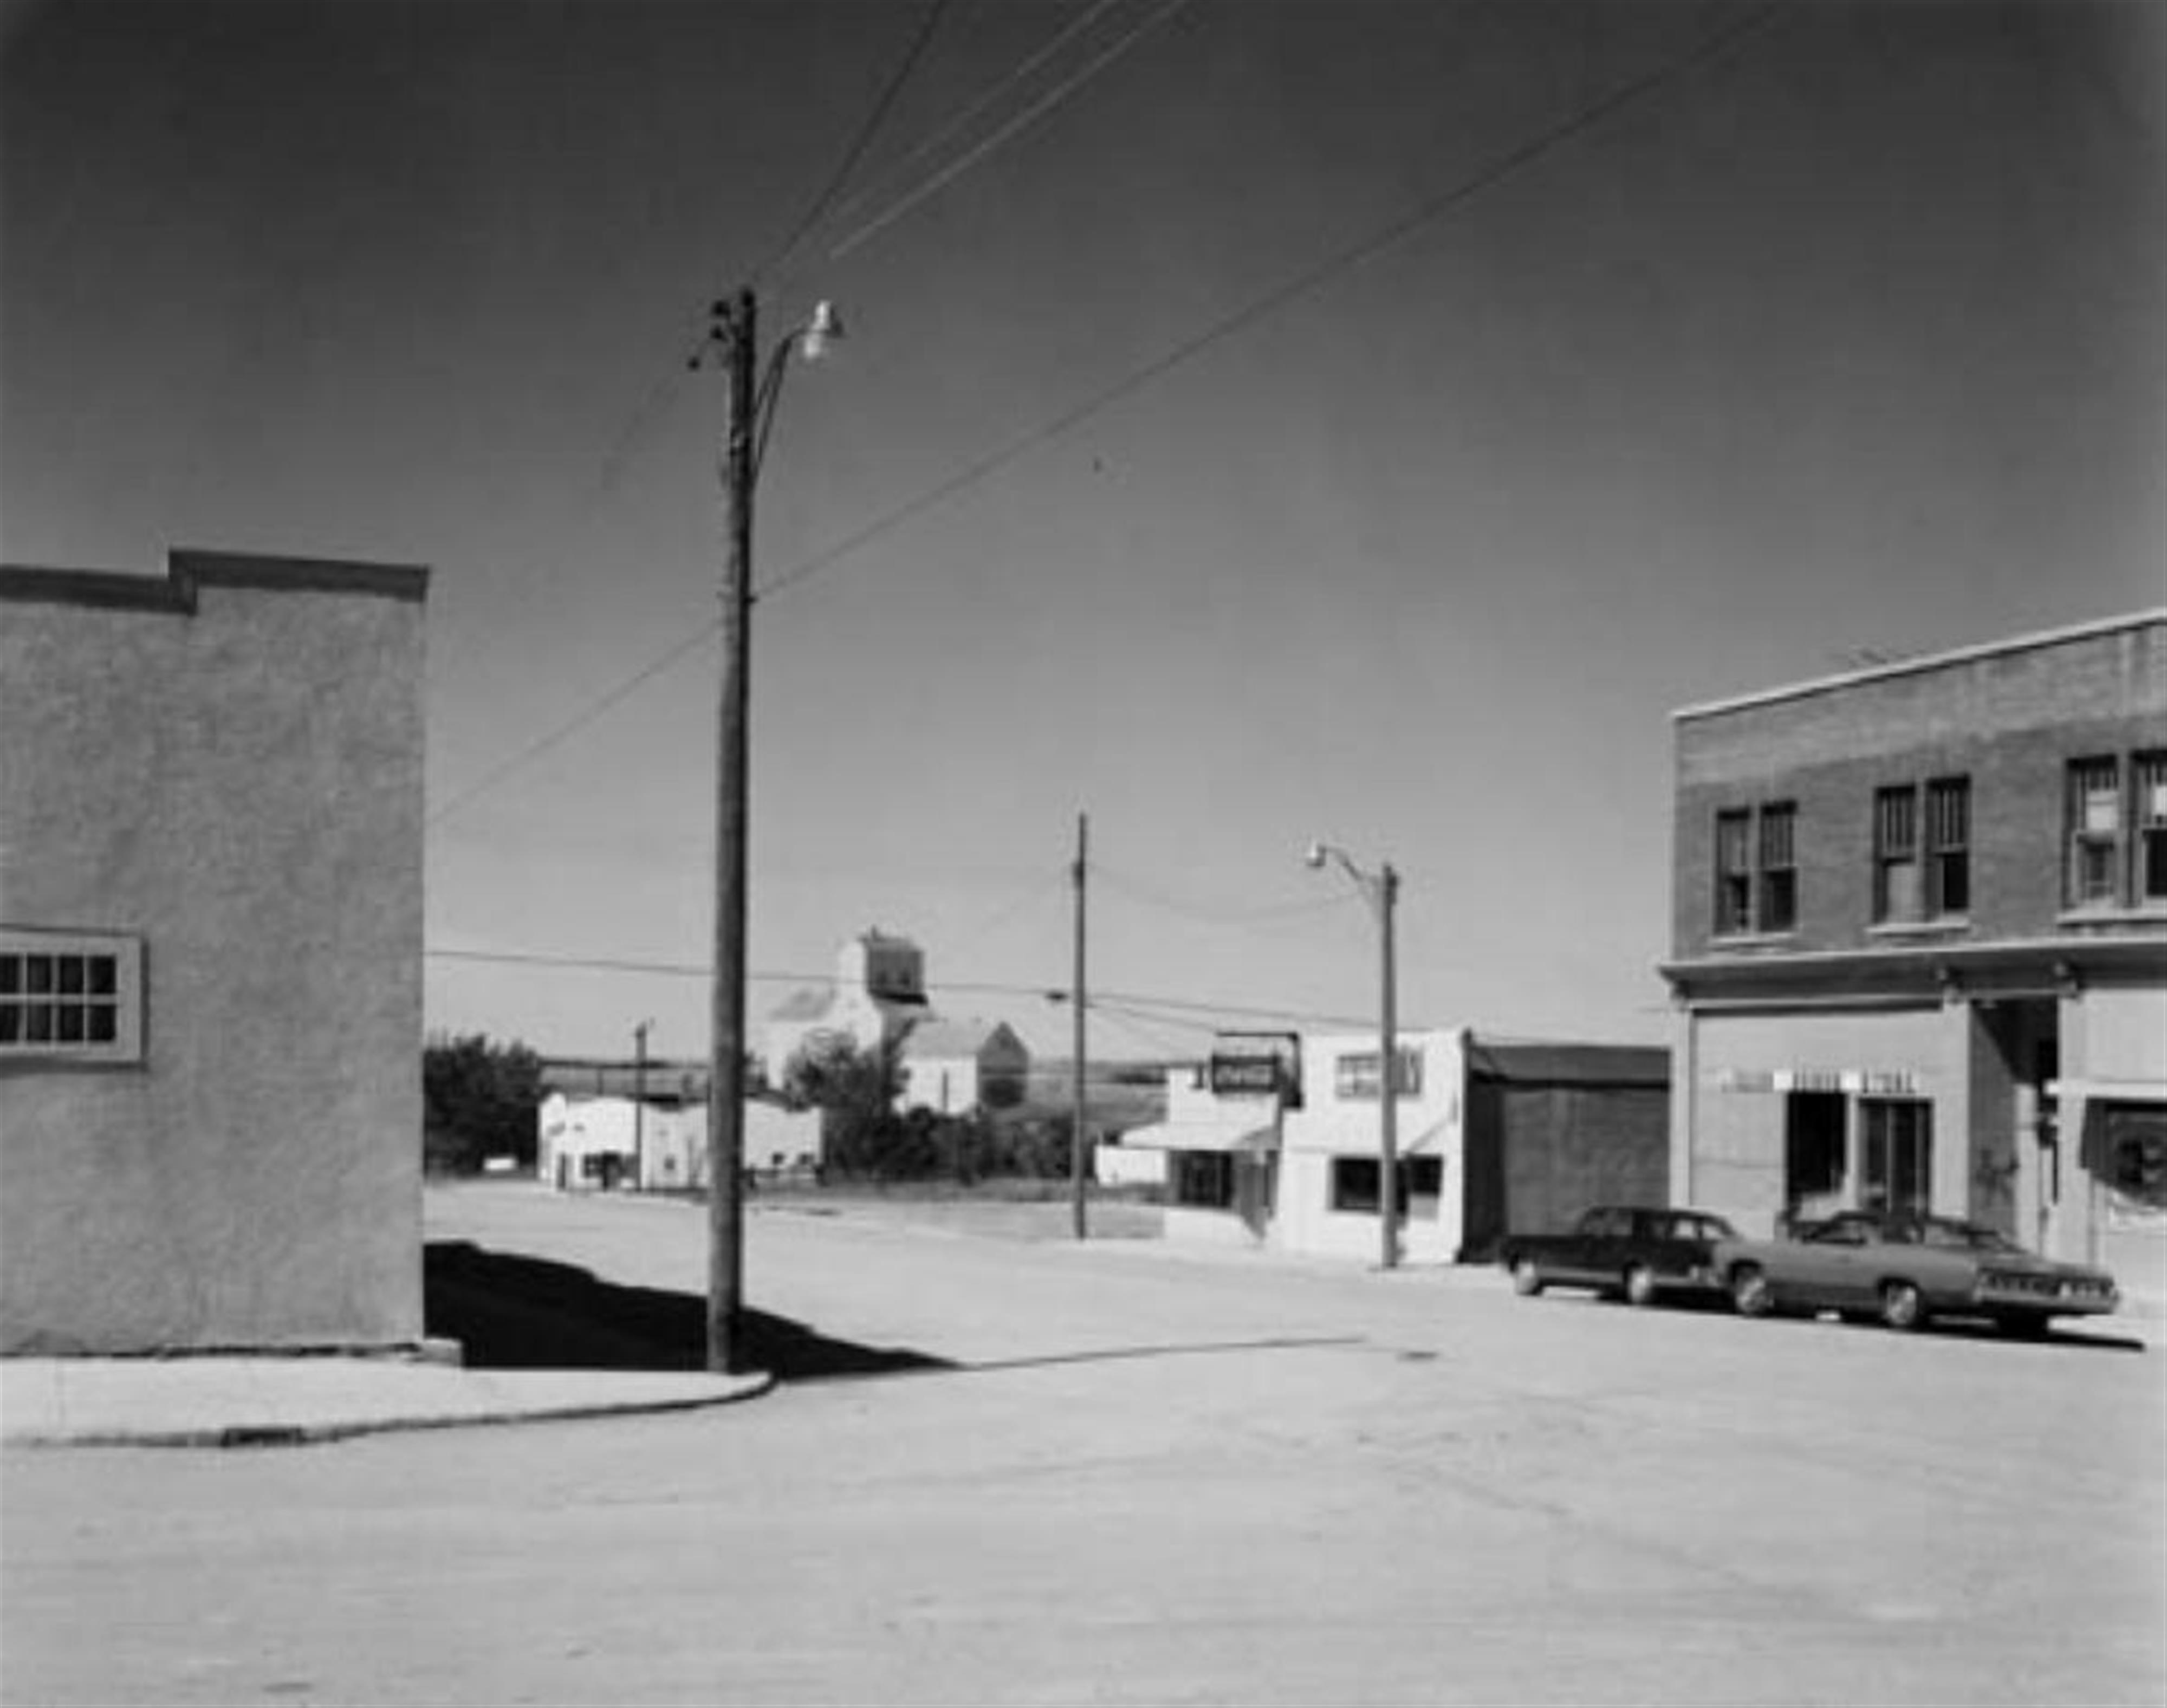 Stephen Shore - Main Street, Gull Lake, Saskatchewan 8/18/74, 1975 Alley Presidio, Texas, 2/21/75, 1975 Holden St. North Adams, Massachusetts 7/13/74, 1975 - image-1